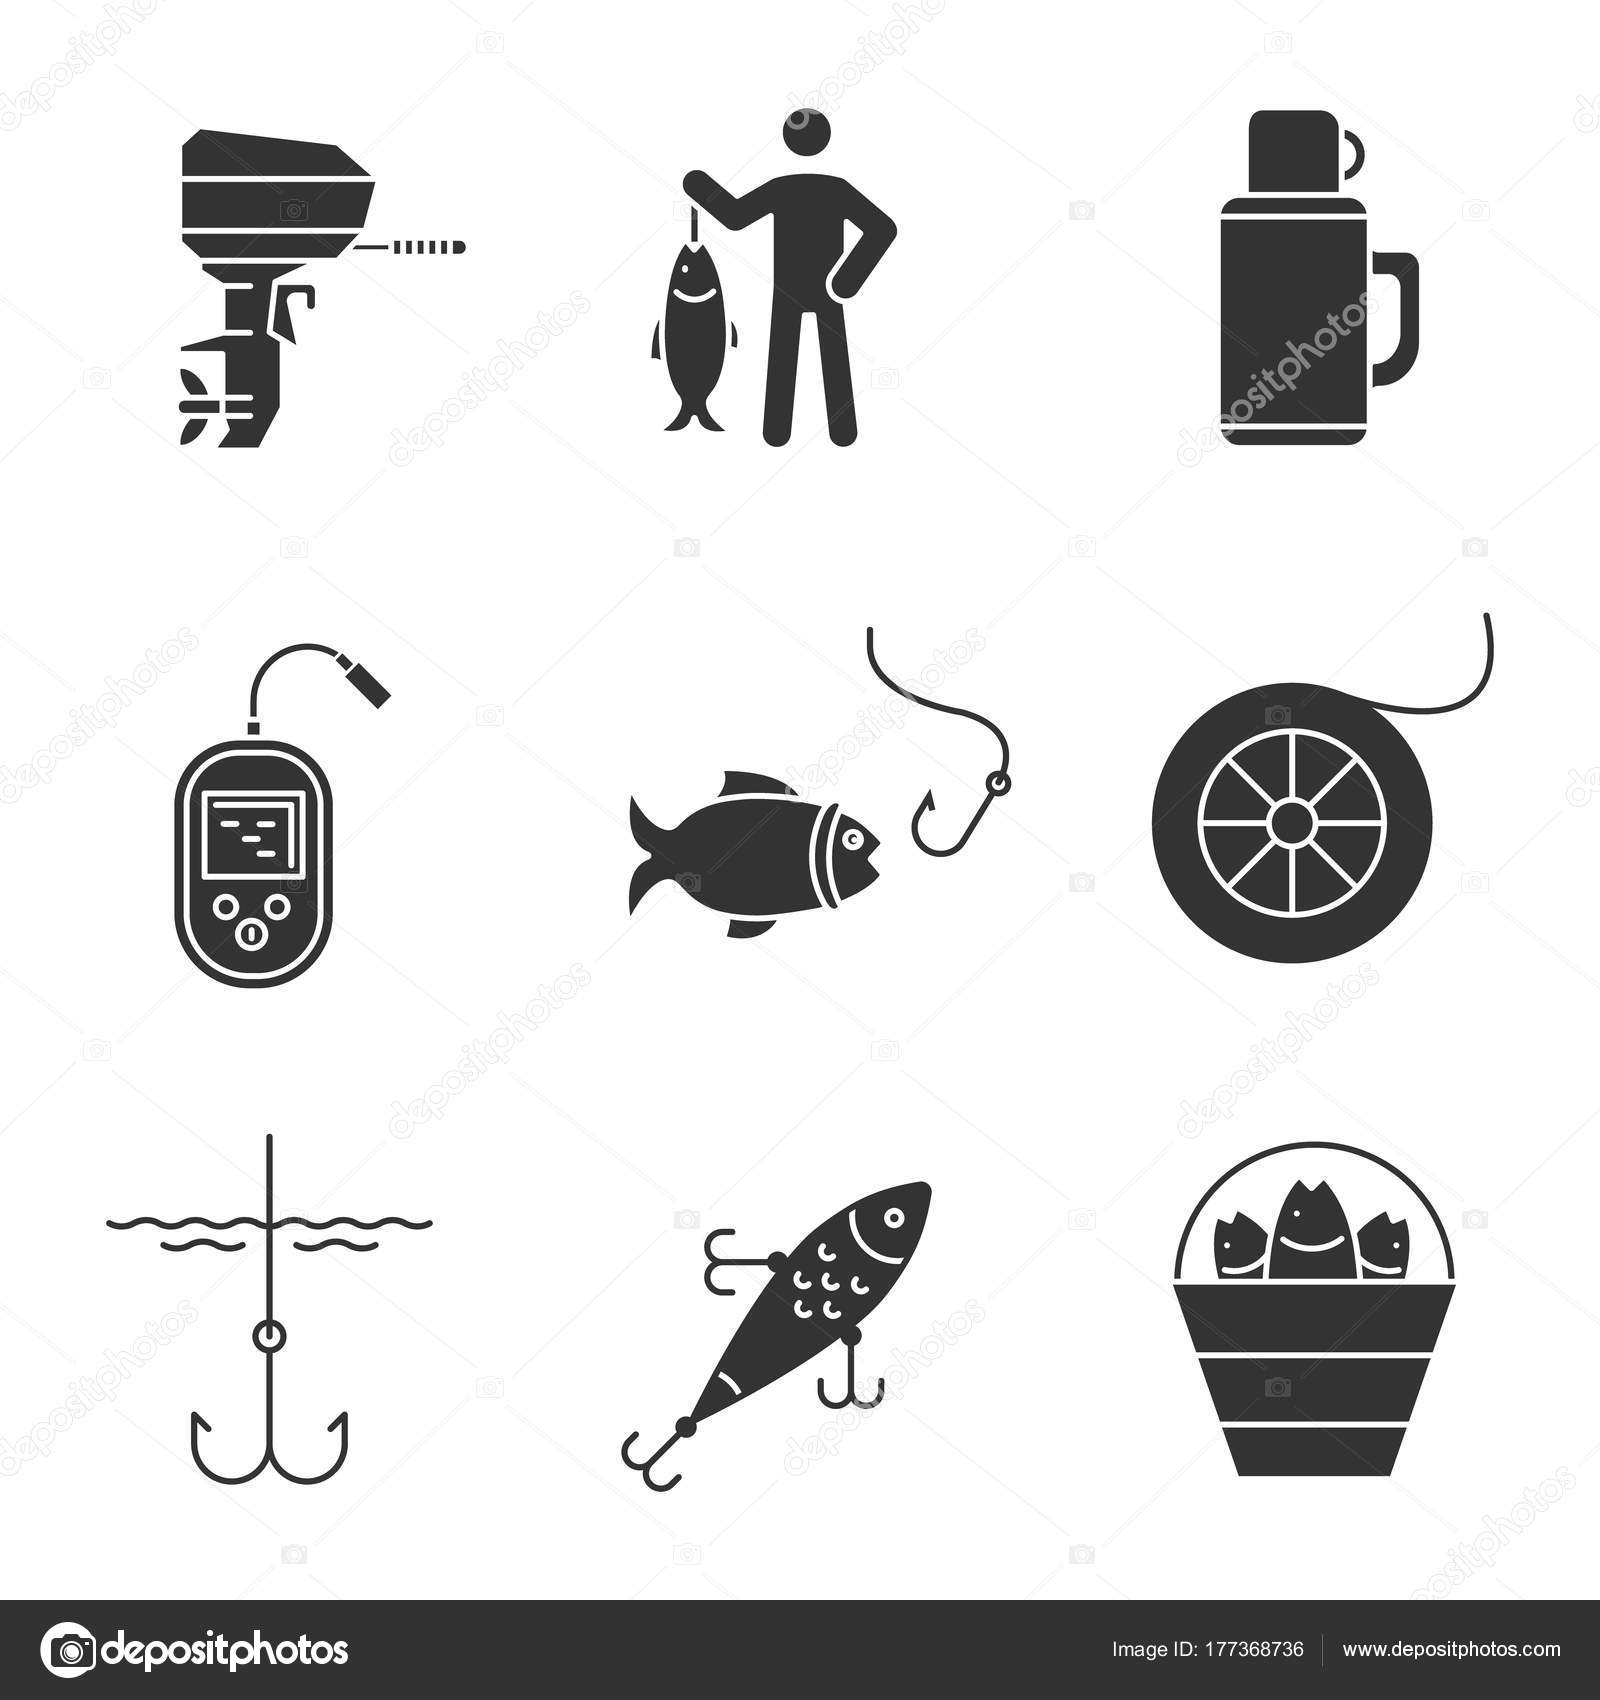 https://st3.depositphotos.com/4177785/17736/v/1600/depositphotos_177368736-stock-illustration-fishing-glyph-icons-set-outboard.jpg